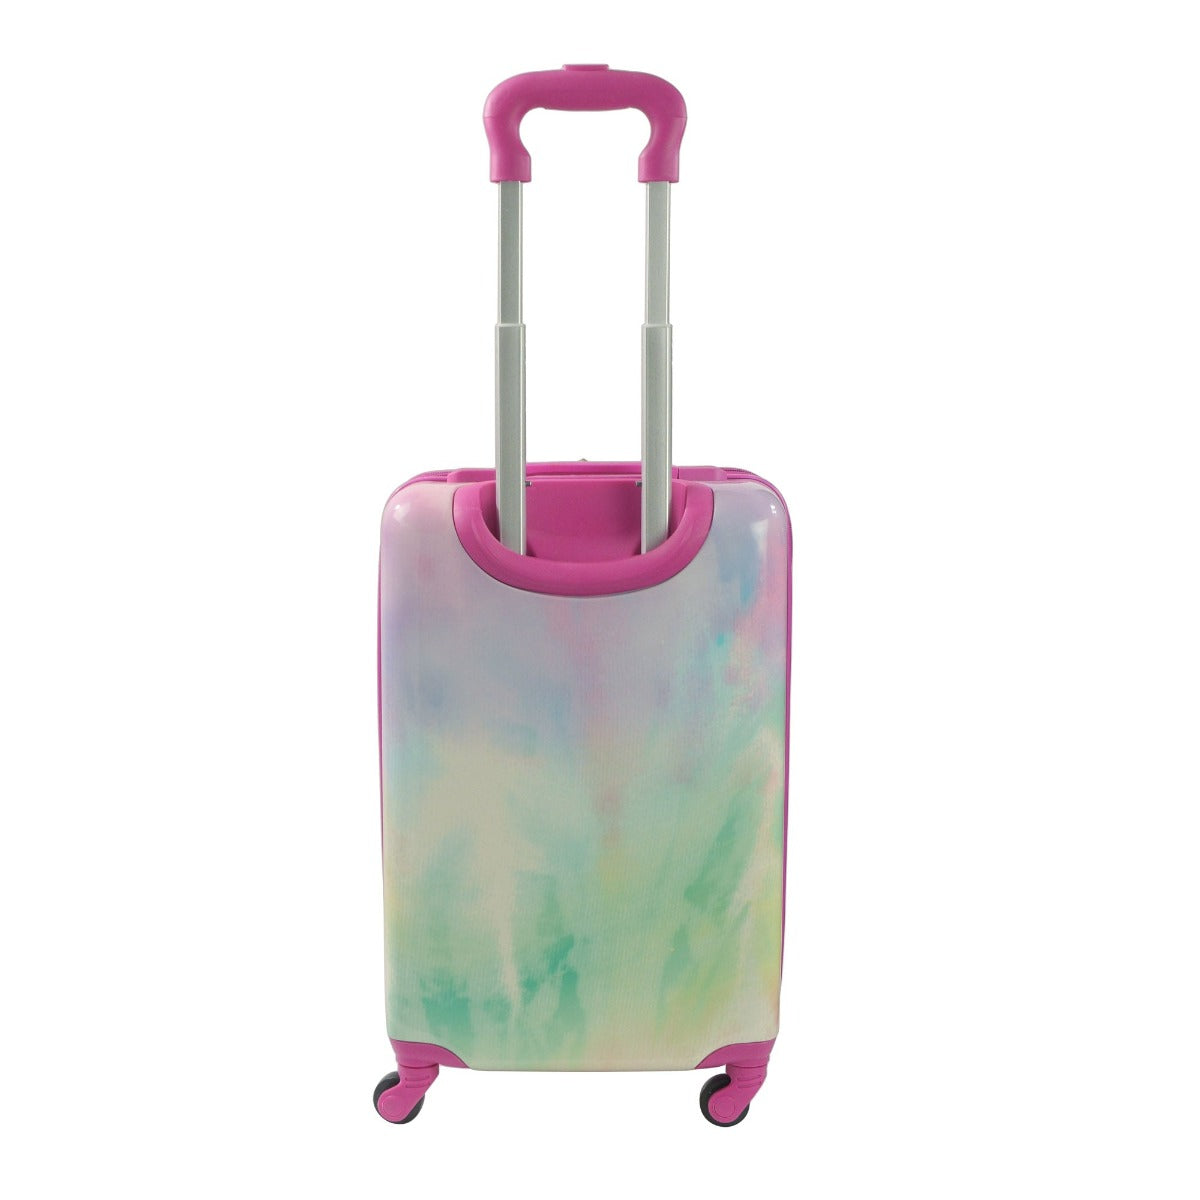 Shop Kids Luggage Spinner Unisex Suitcase Mul – Luggage Factory